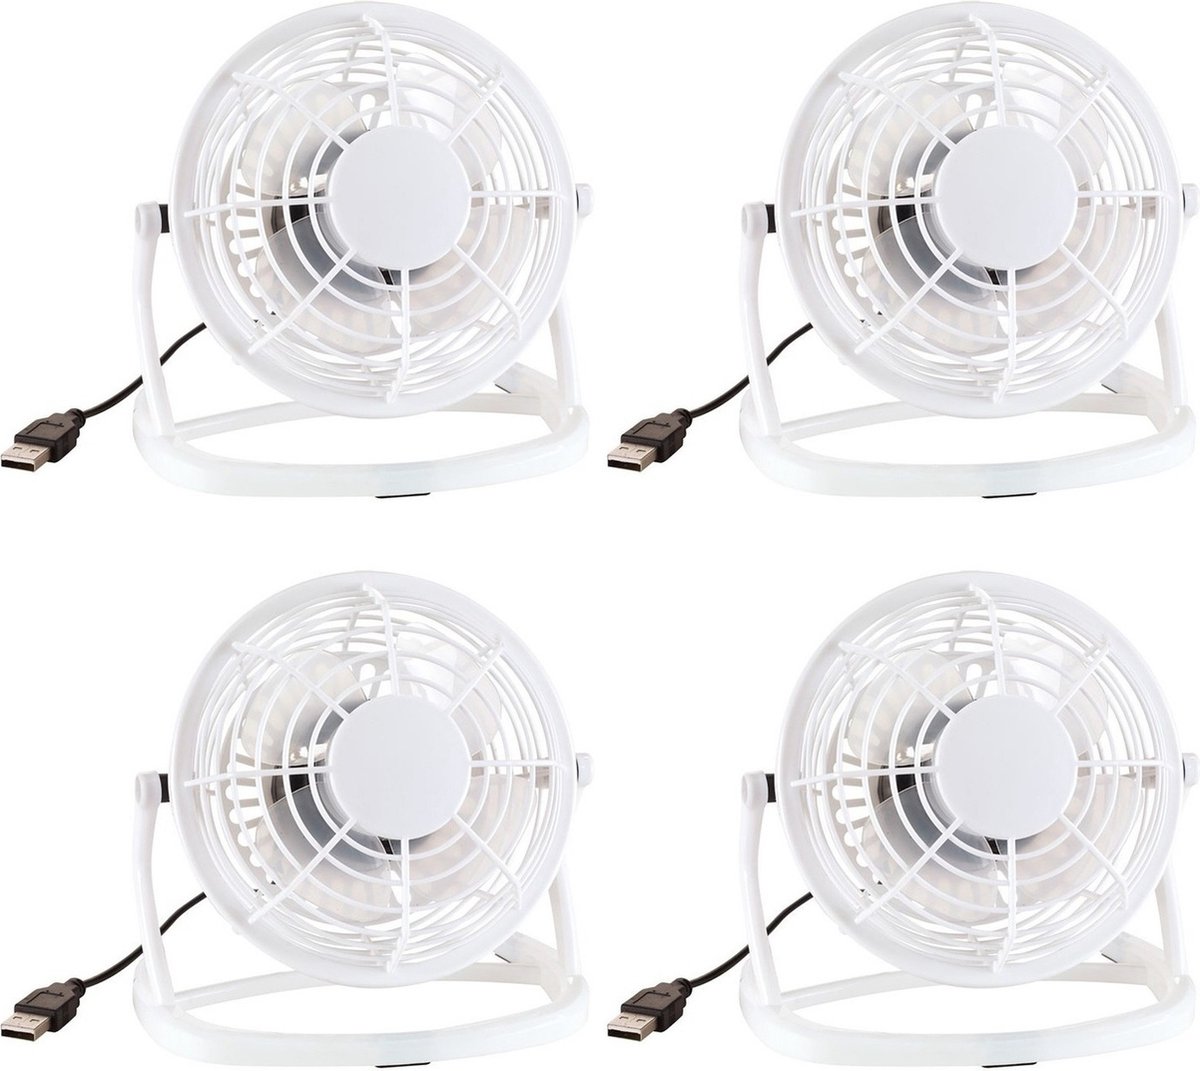 Set van 4x stuks mini ventilator wit 14 cm - USB aansluiting - Tafelventilator - Bureau ventilator